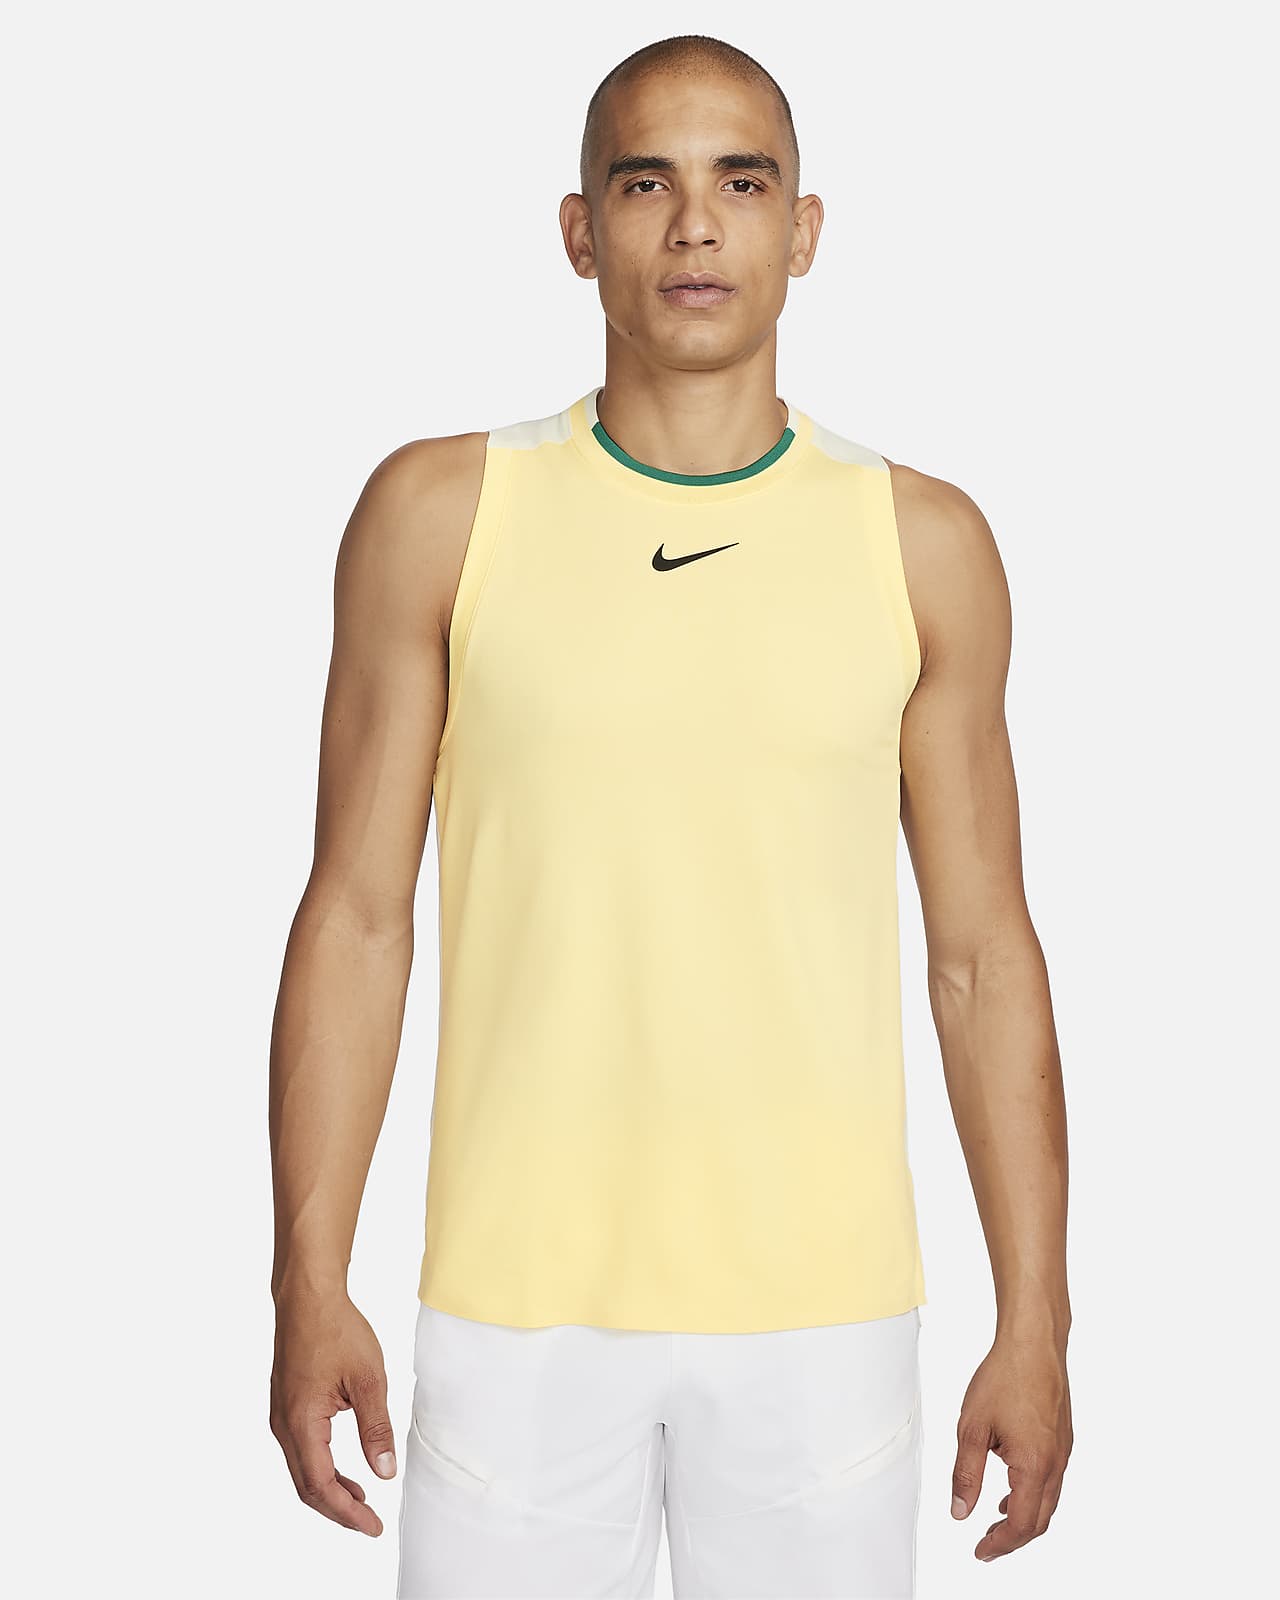 Men's Tank Tops & Sleeveless Shirts. Nike PT